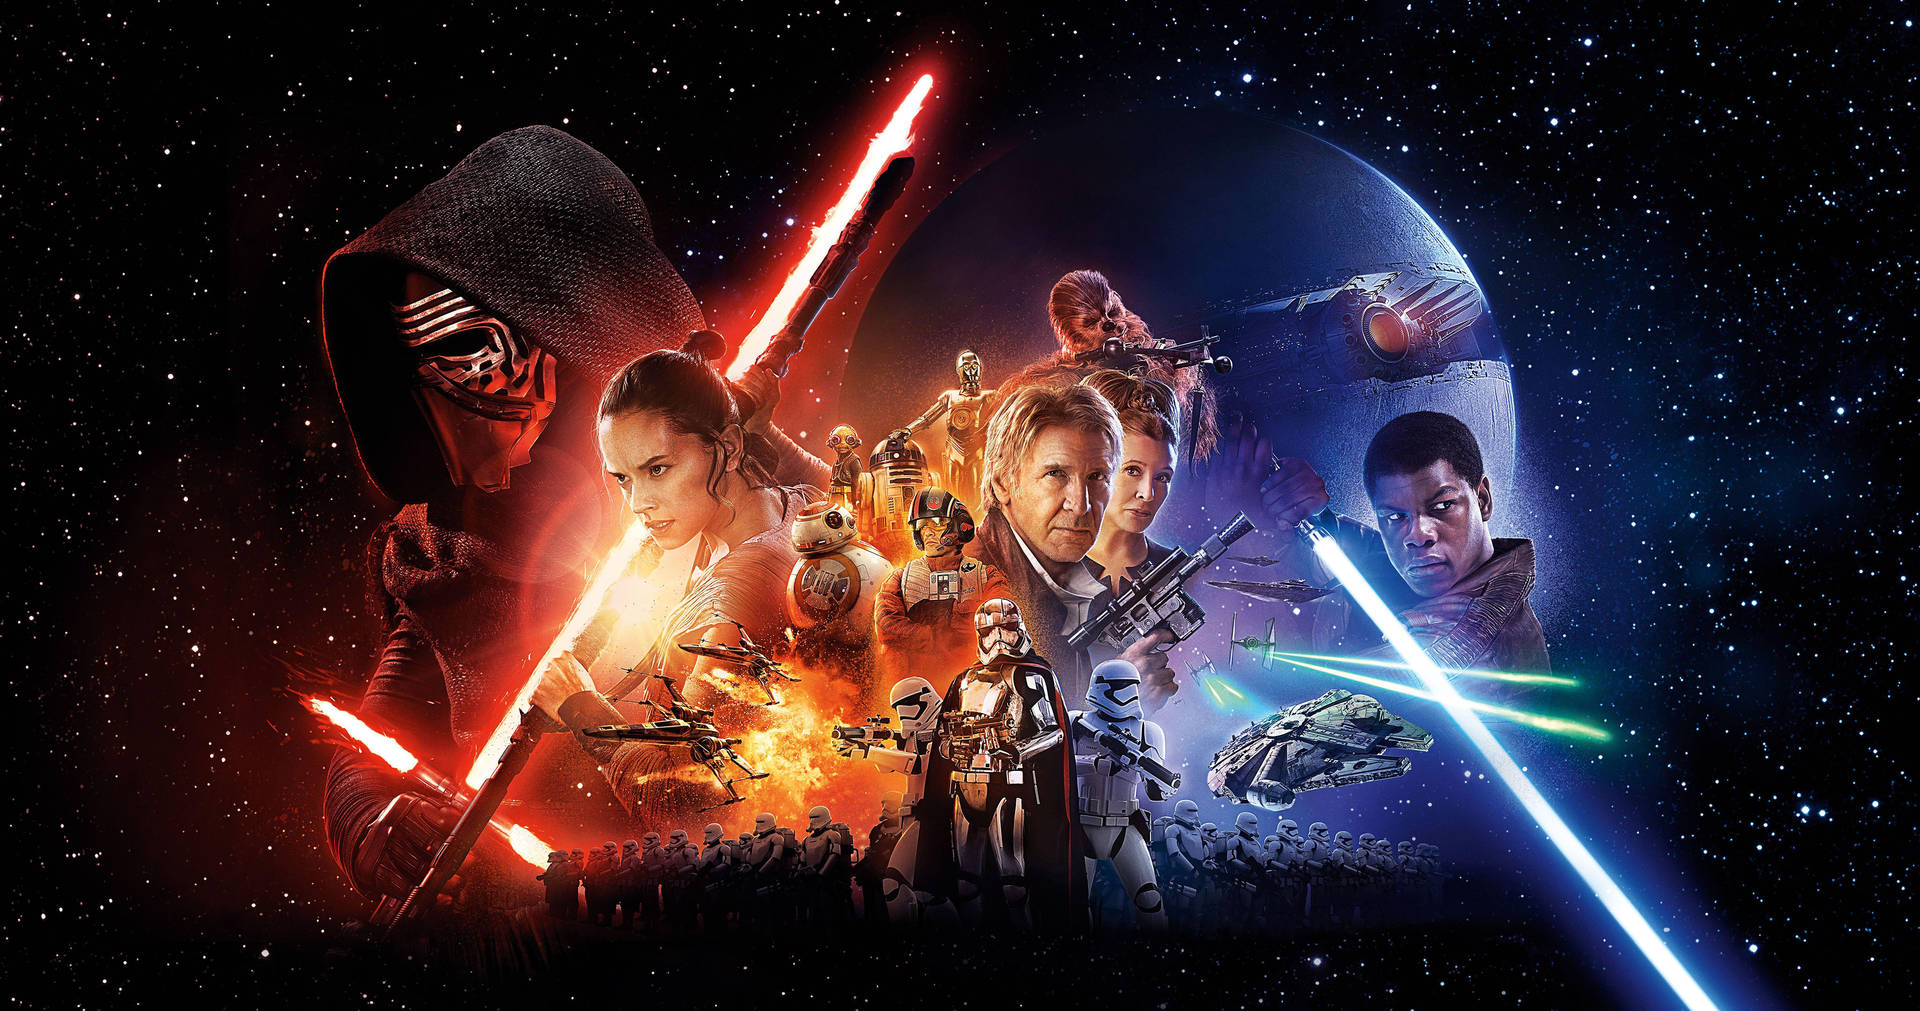 4k Star Wars The Force Awakens Background